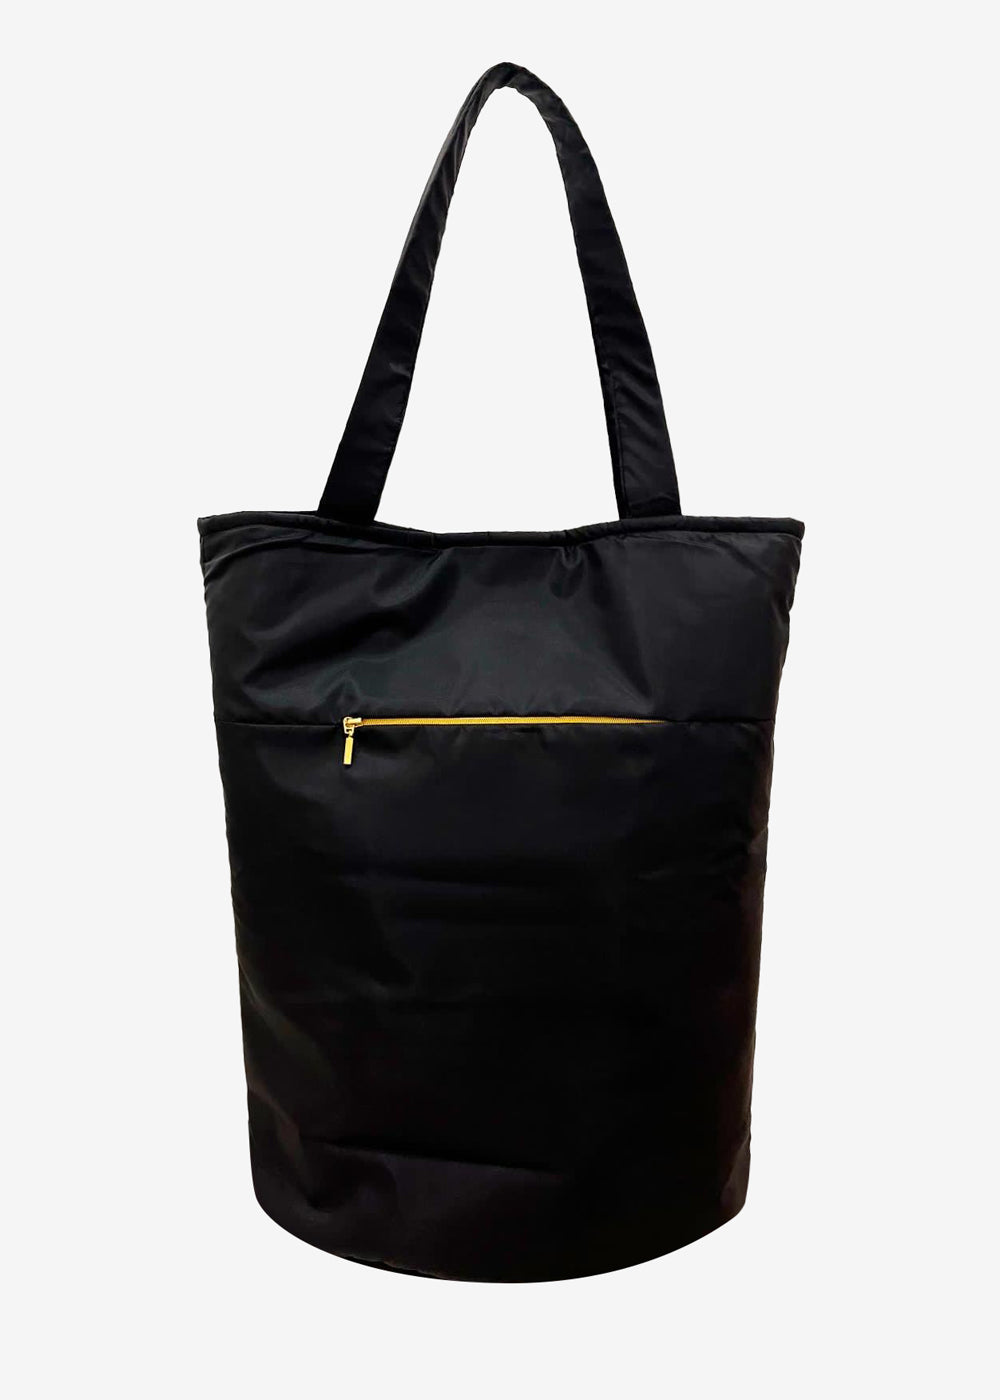 Nikolay Large tote (Tutu) bag with side zip pocket